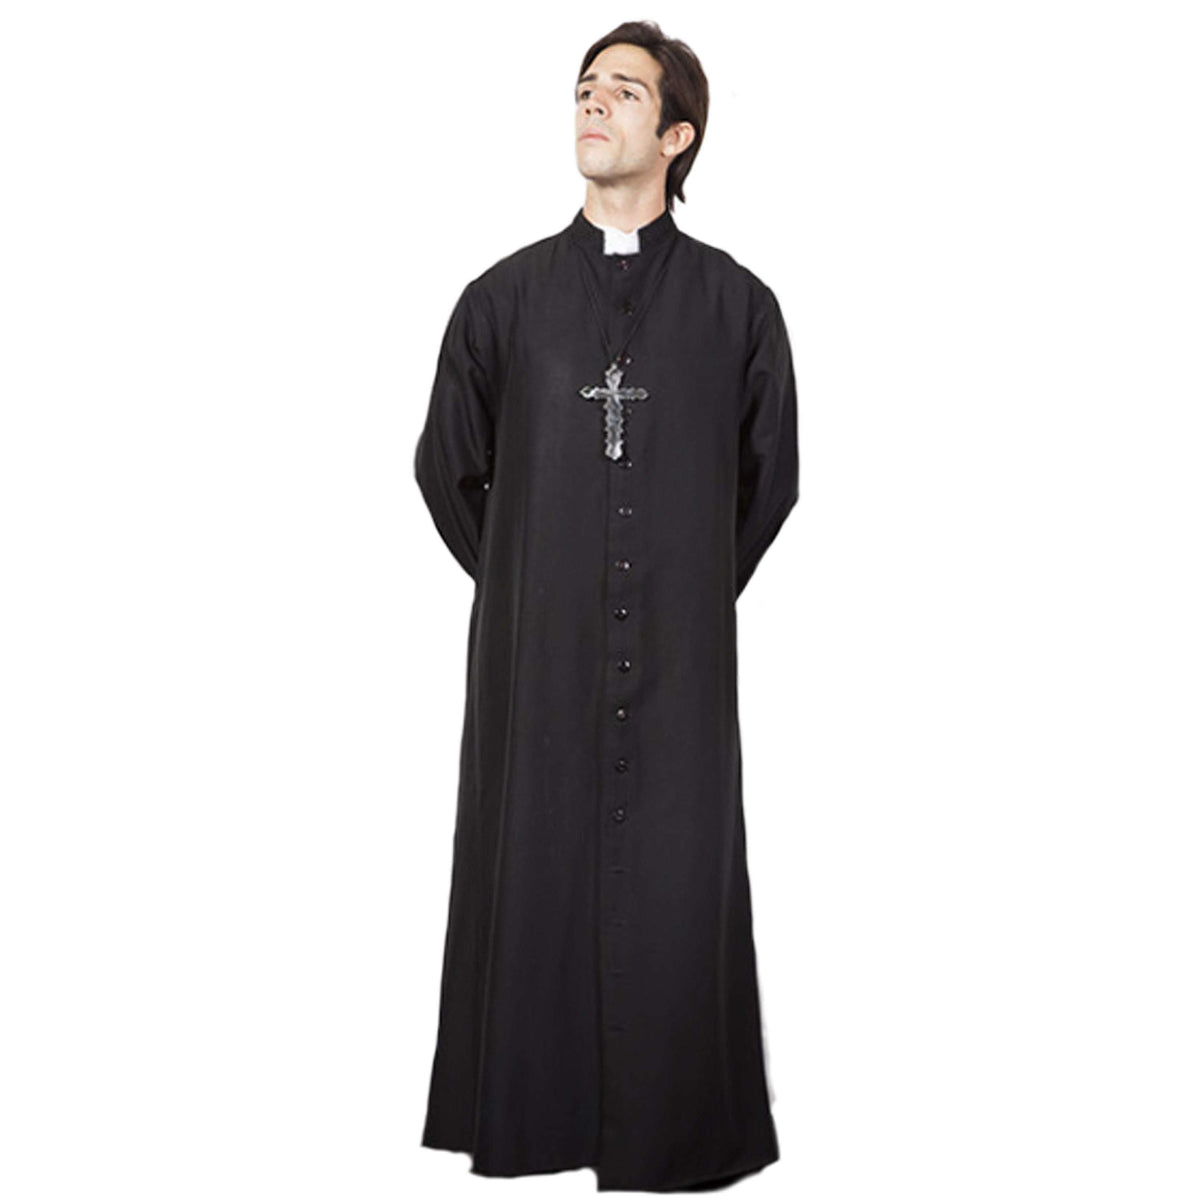 Rental- Religious Black Priest Robe- M/L